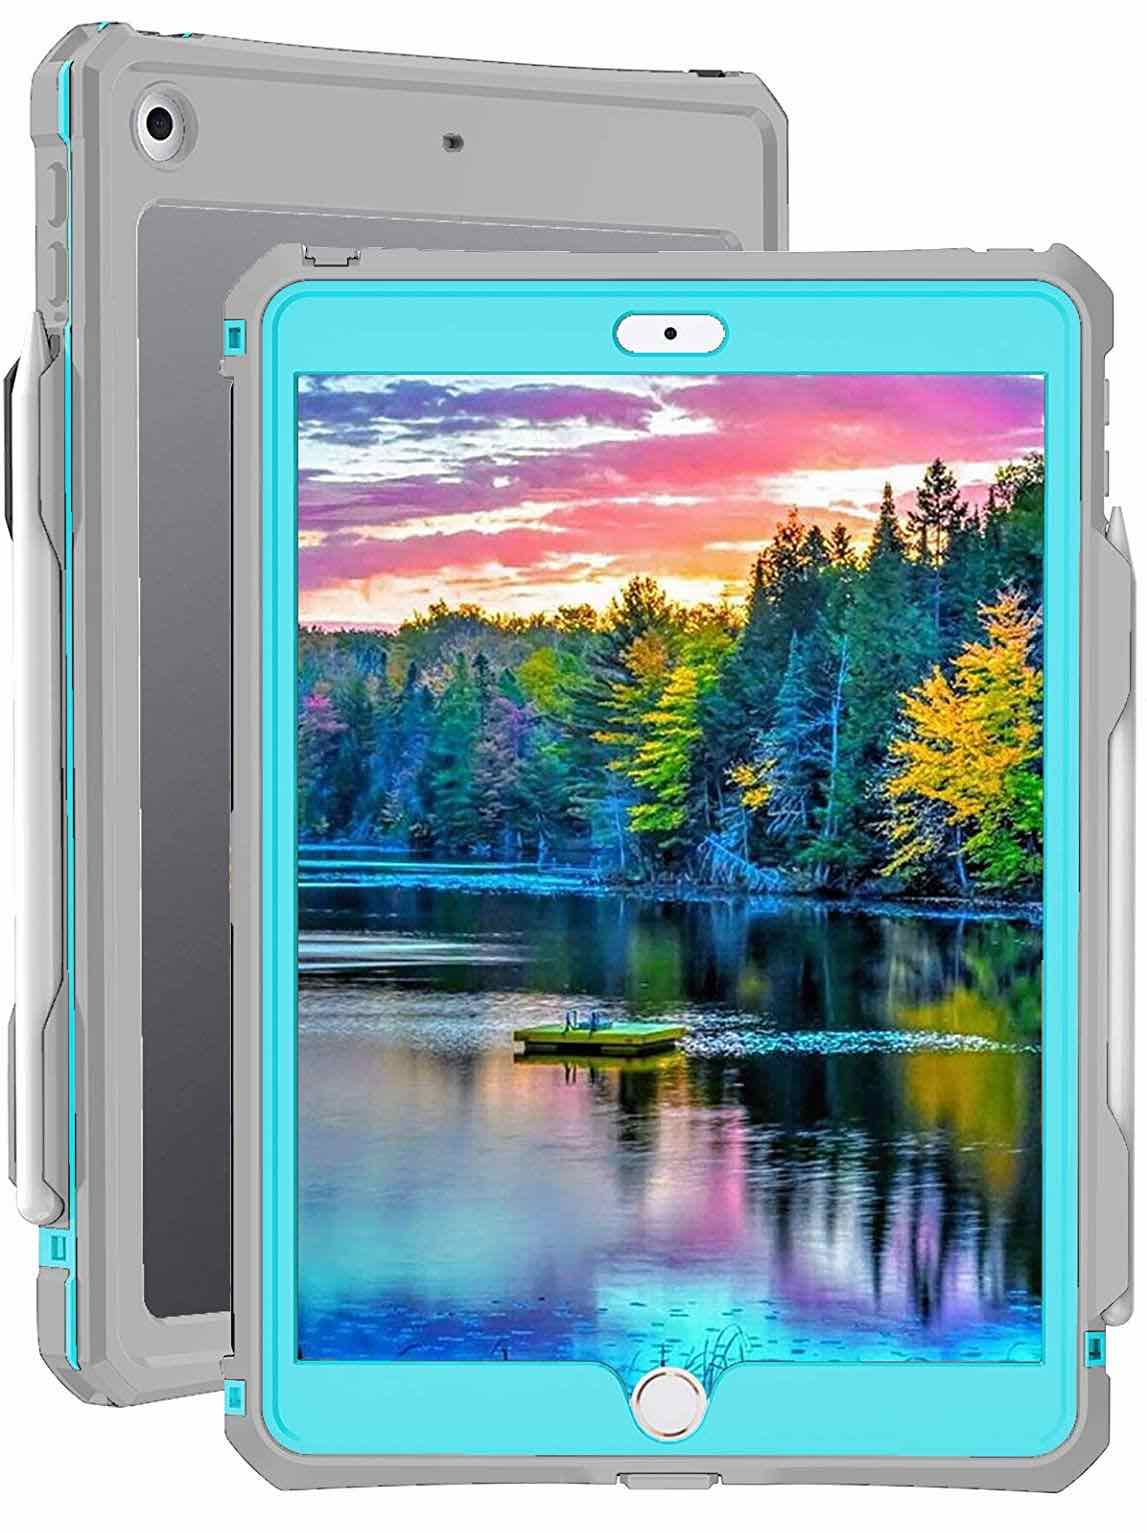 Transy waterproof iPad case